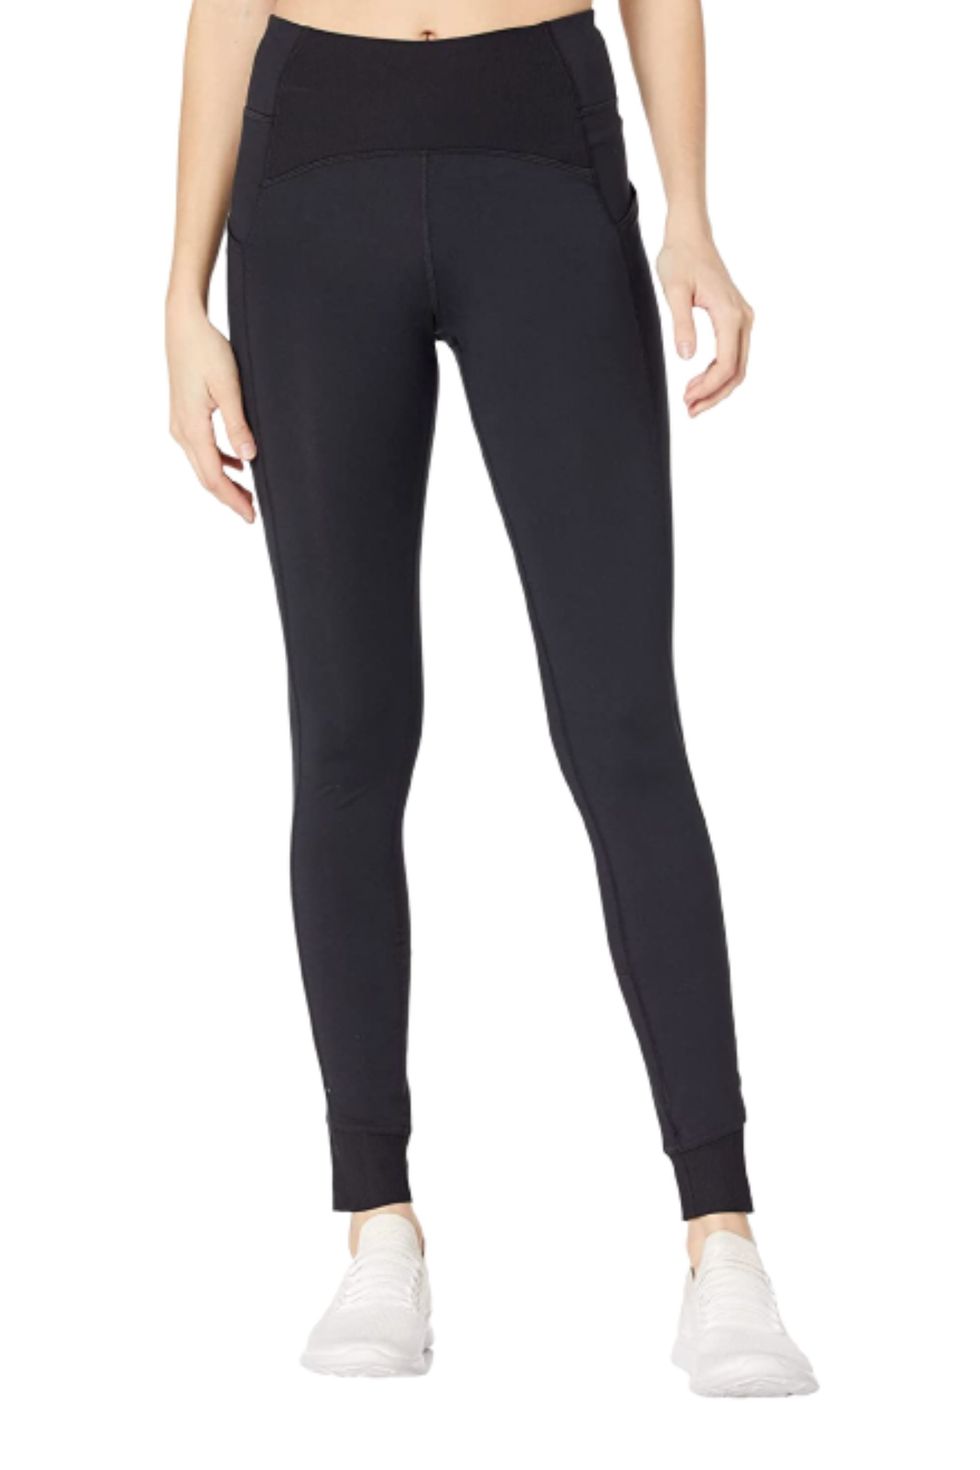 Buy Duofold Women's Mid Weight Fleece Lined Thermal Legging, Black